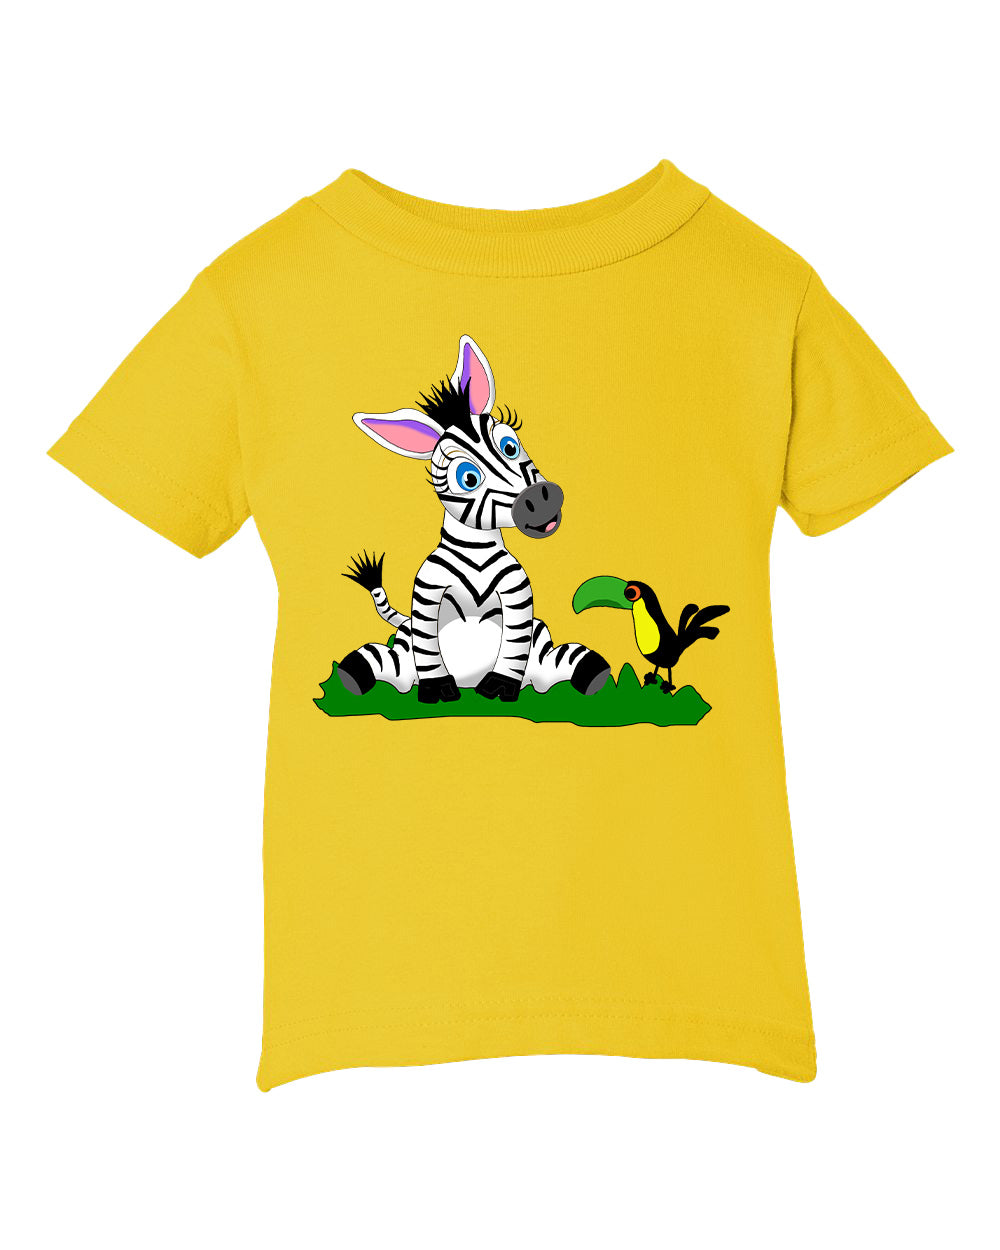 Zebra Toddler T-shirt